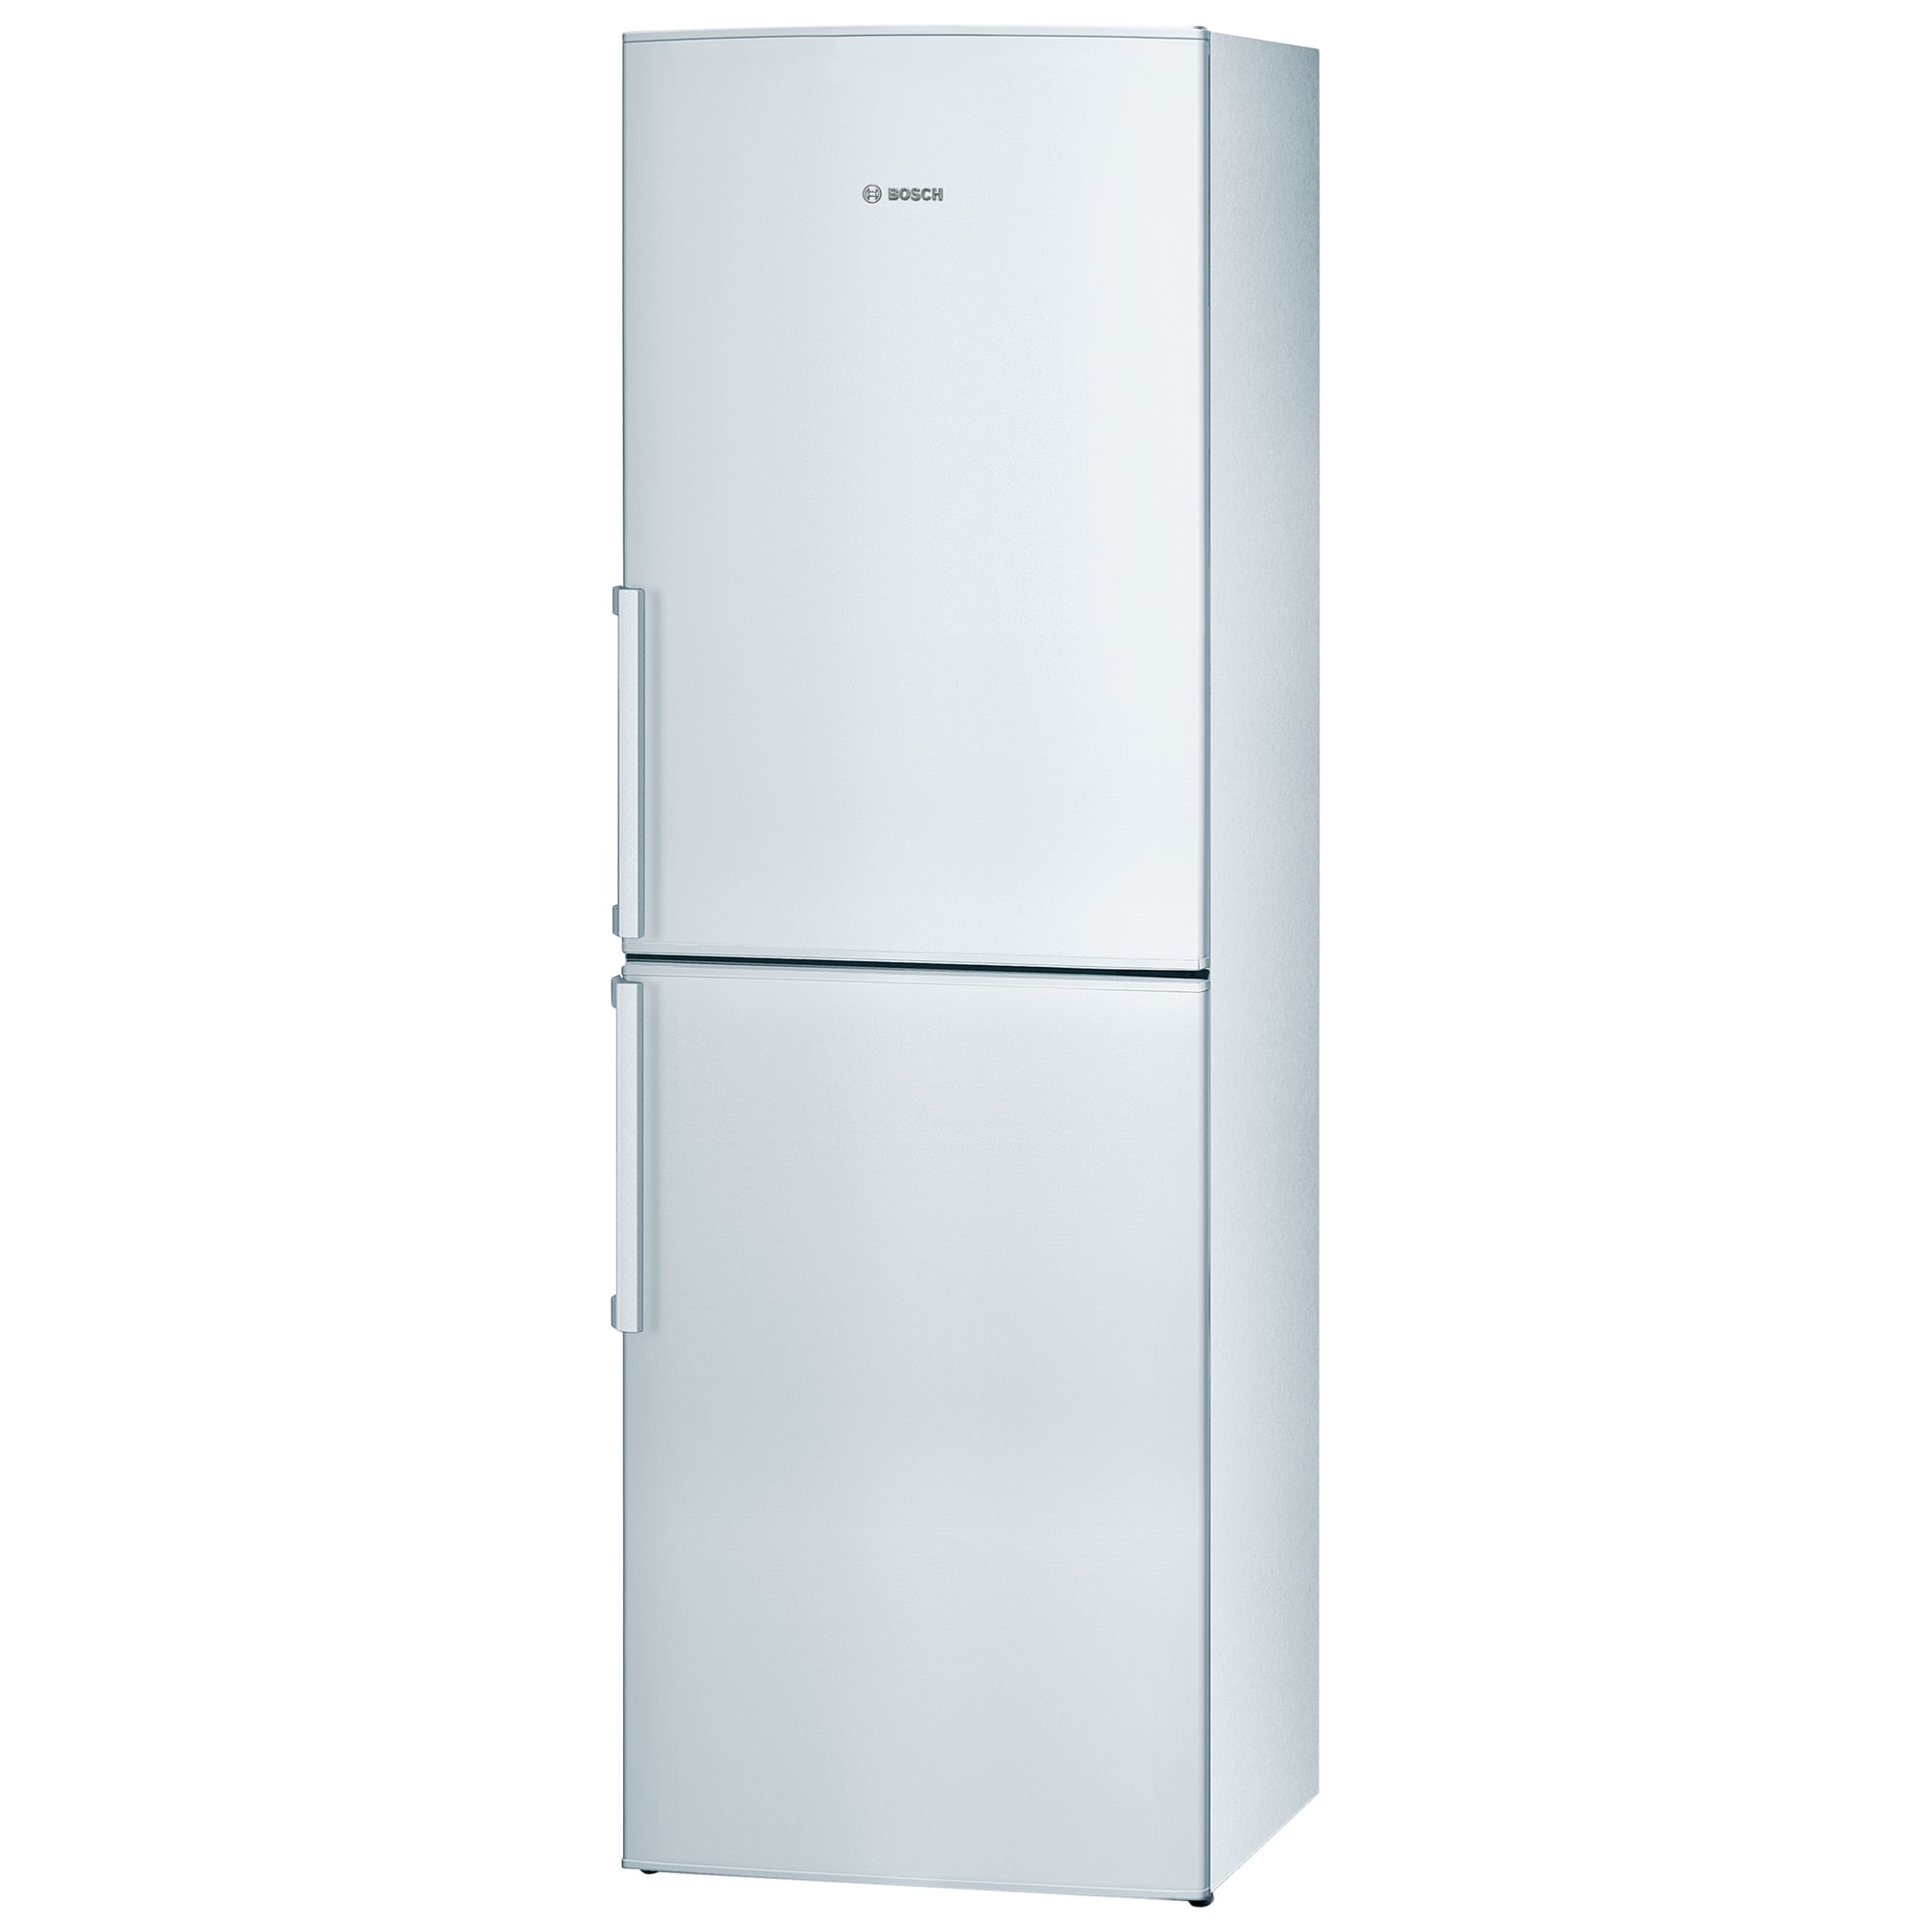 Bosch KGN34VW20G No Frost Fridge Freezer, A+ Energy Rating, 60cm Wide in White